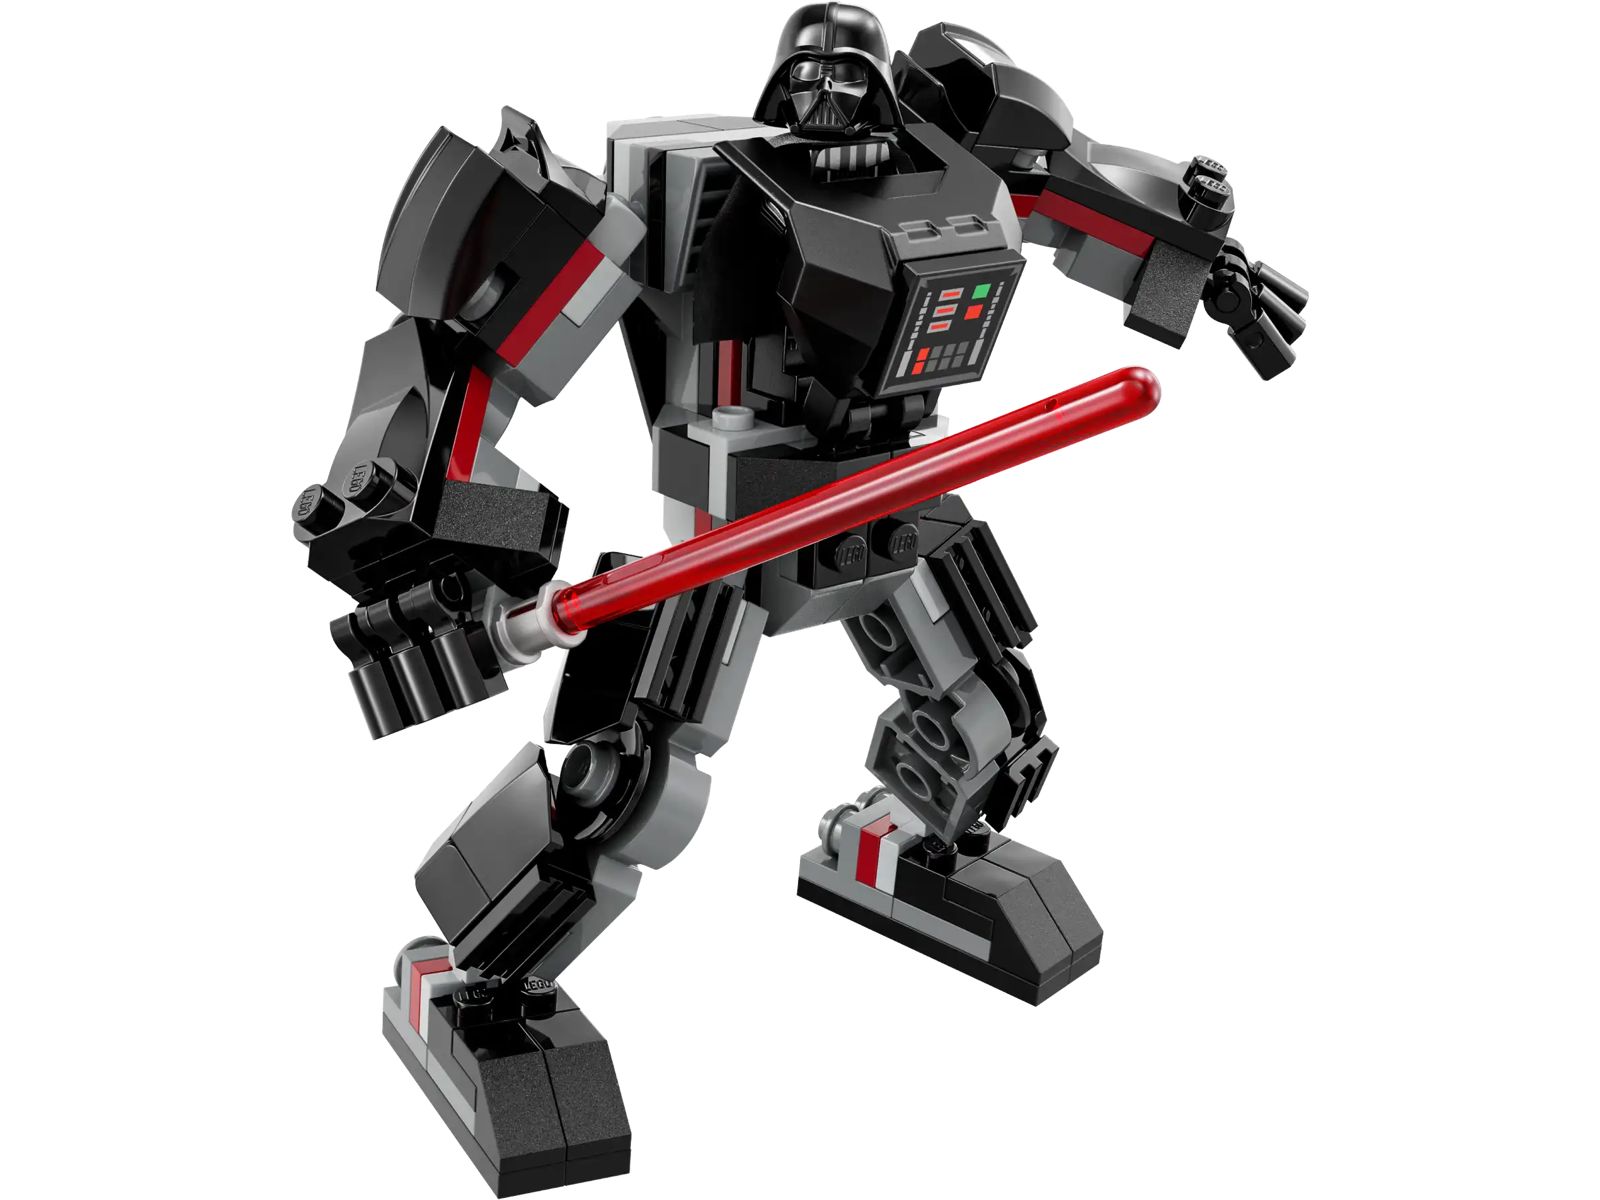 Lego Star Wars Meca de Darth Vader0 75368